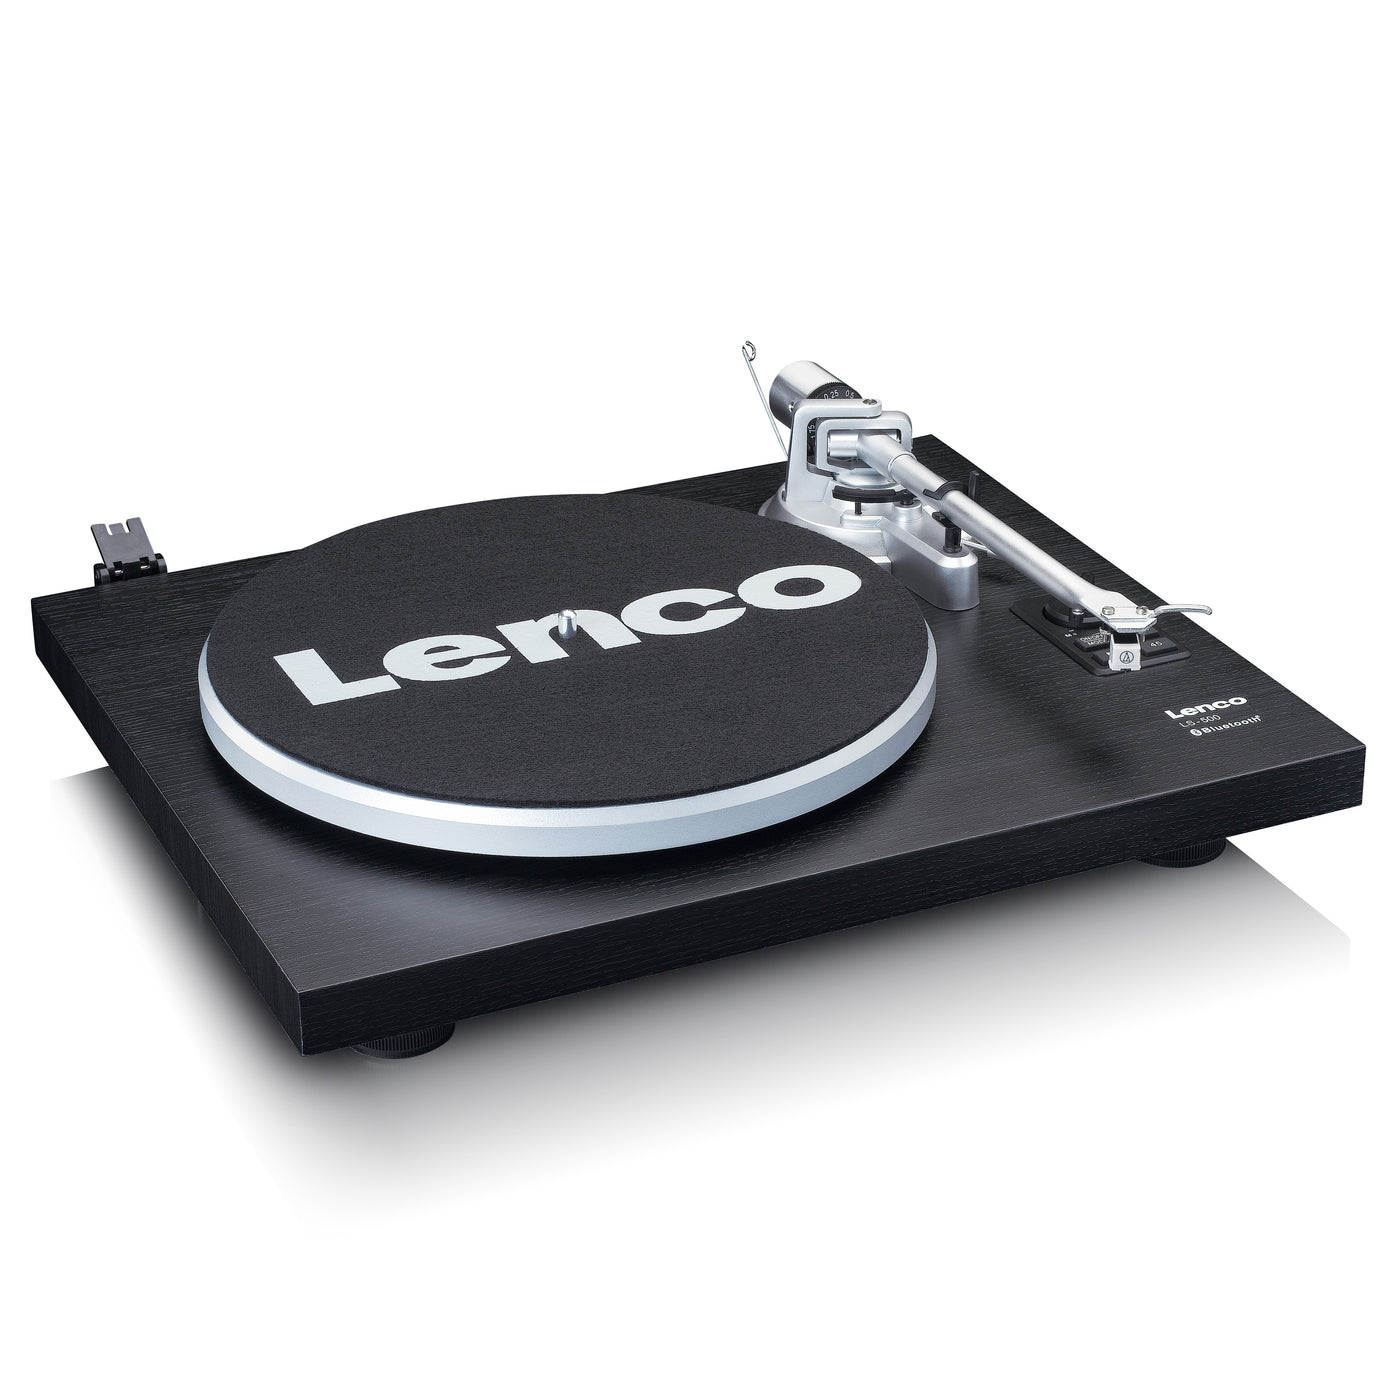 Lenco.de LS-500BK Lenco Lenco Webshop Webshop Jetzt – Offizieller | - im kaufen? offiziellen